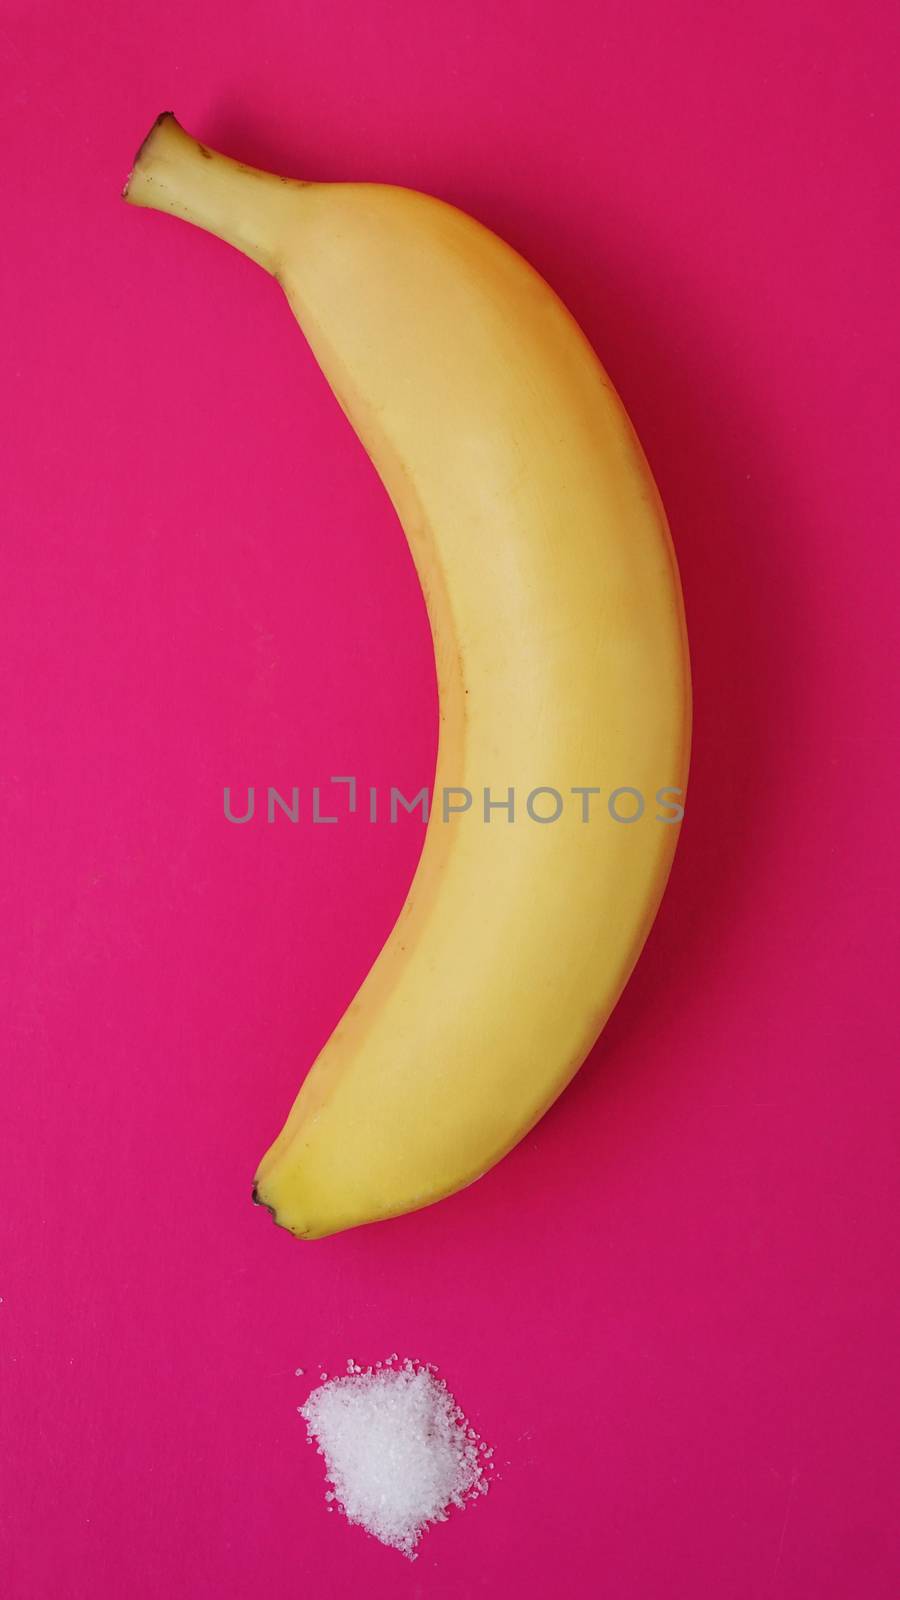 Banana and sugar on a pink background by natali_brill